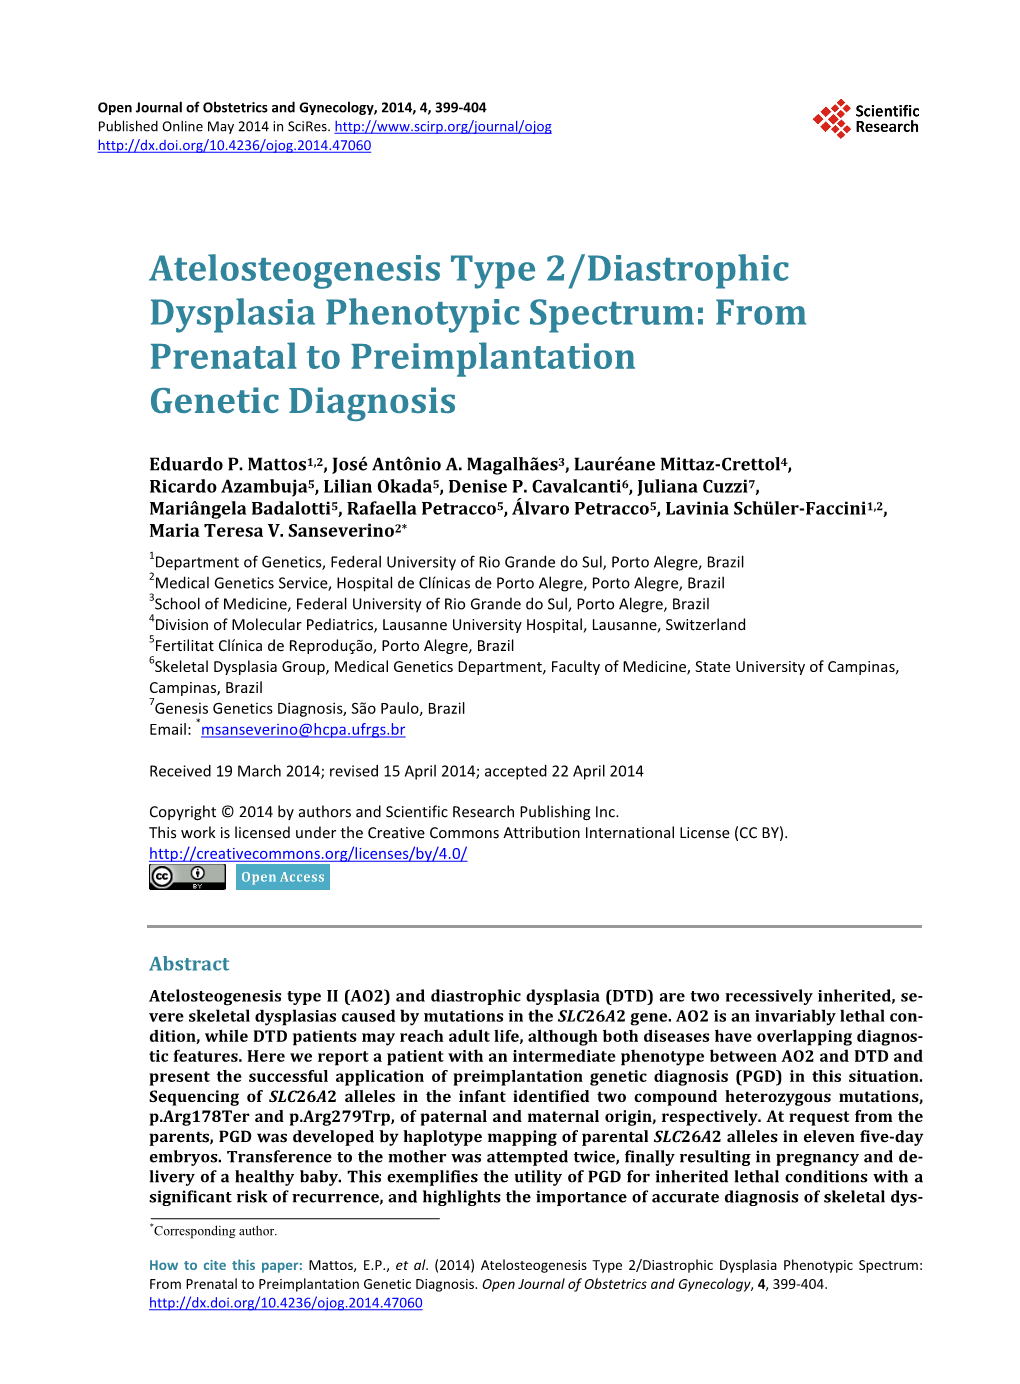 From Prenatal to Preimplantation Genetic Diagnosis